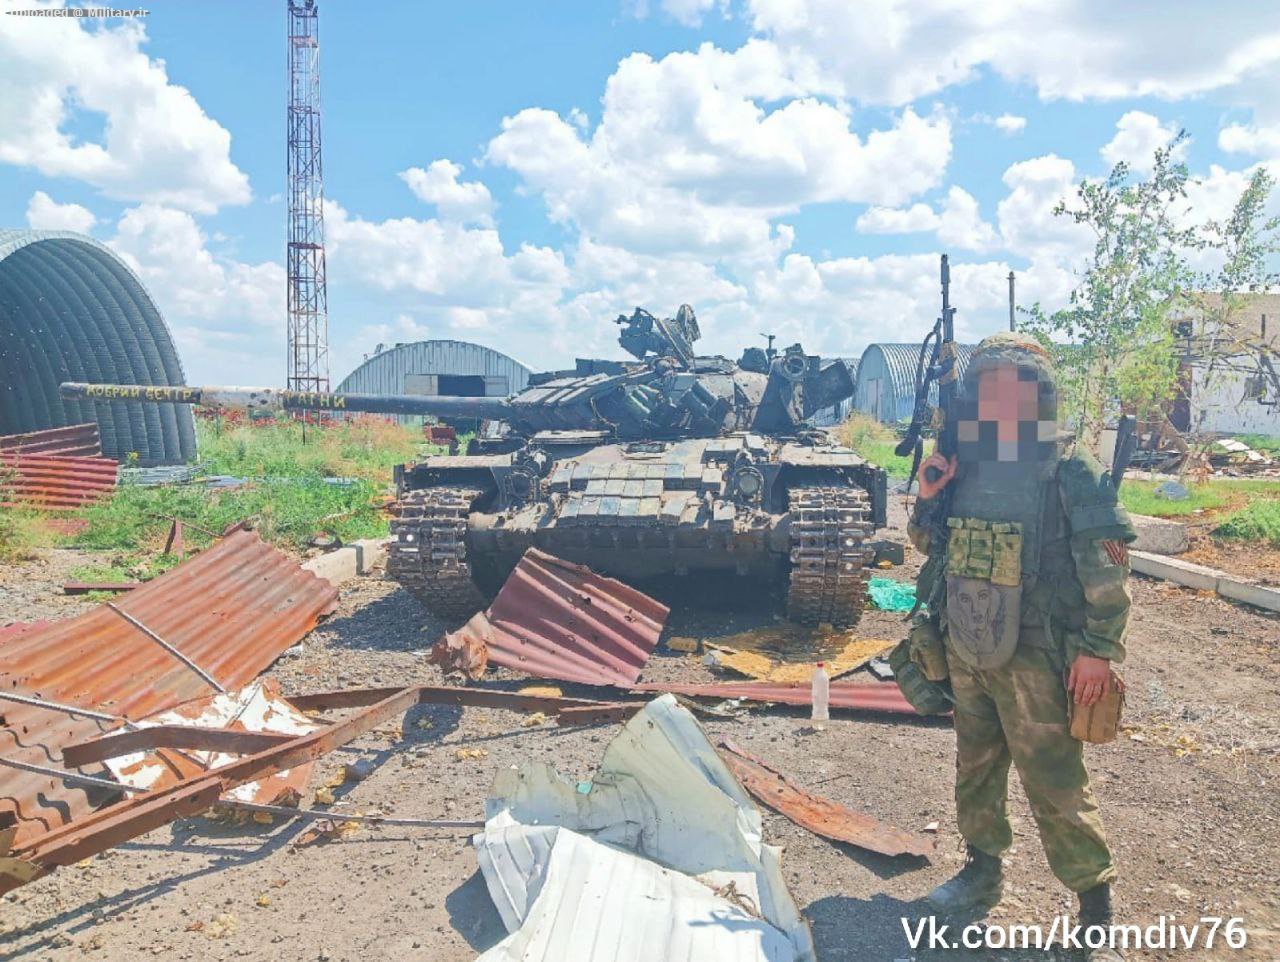 Another_Ukrainian_T-64BV_tank_shot_down_